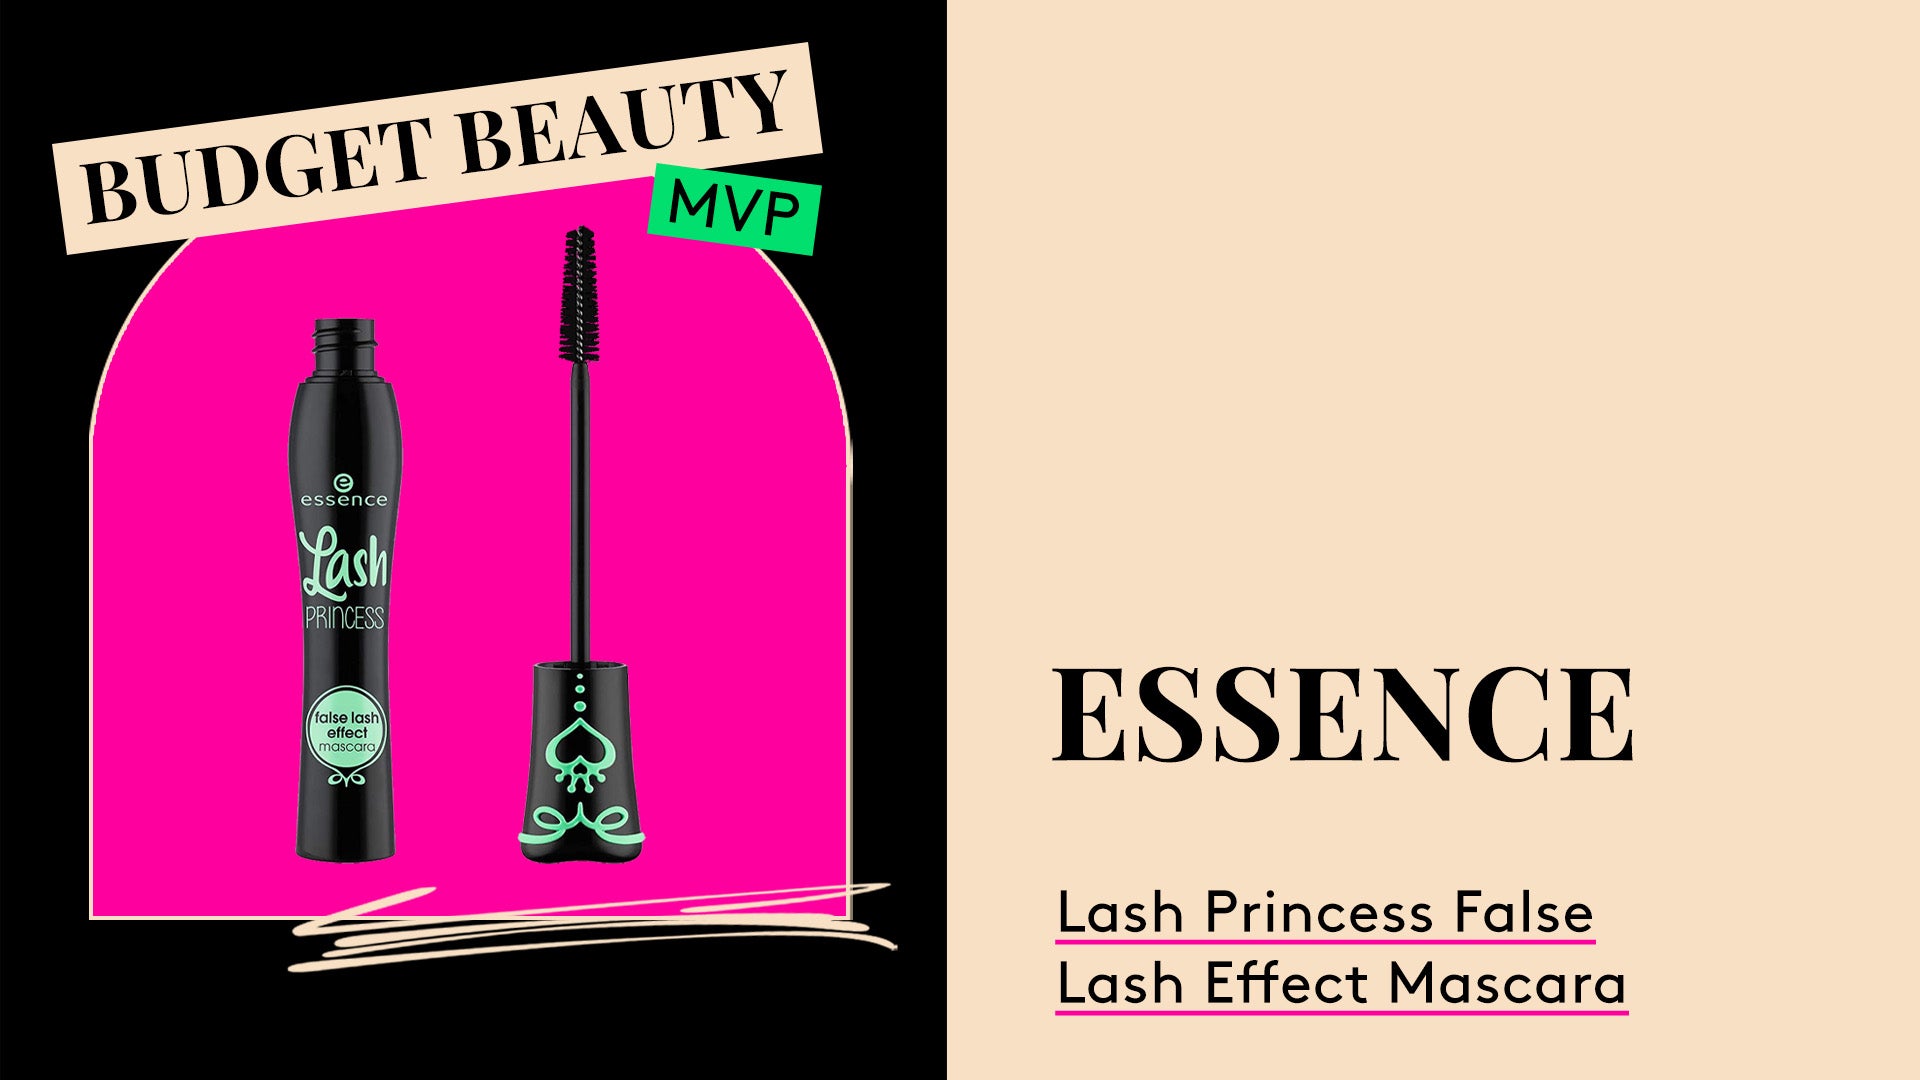 Budget Beauty MVP. Essence Lash Princess False Lash Effect Mascara.